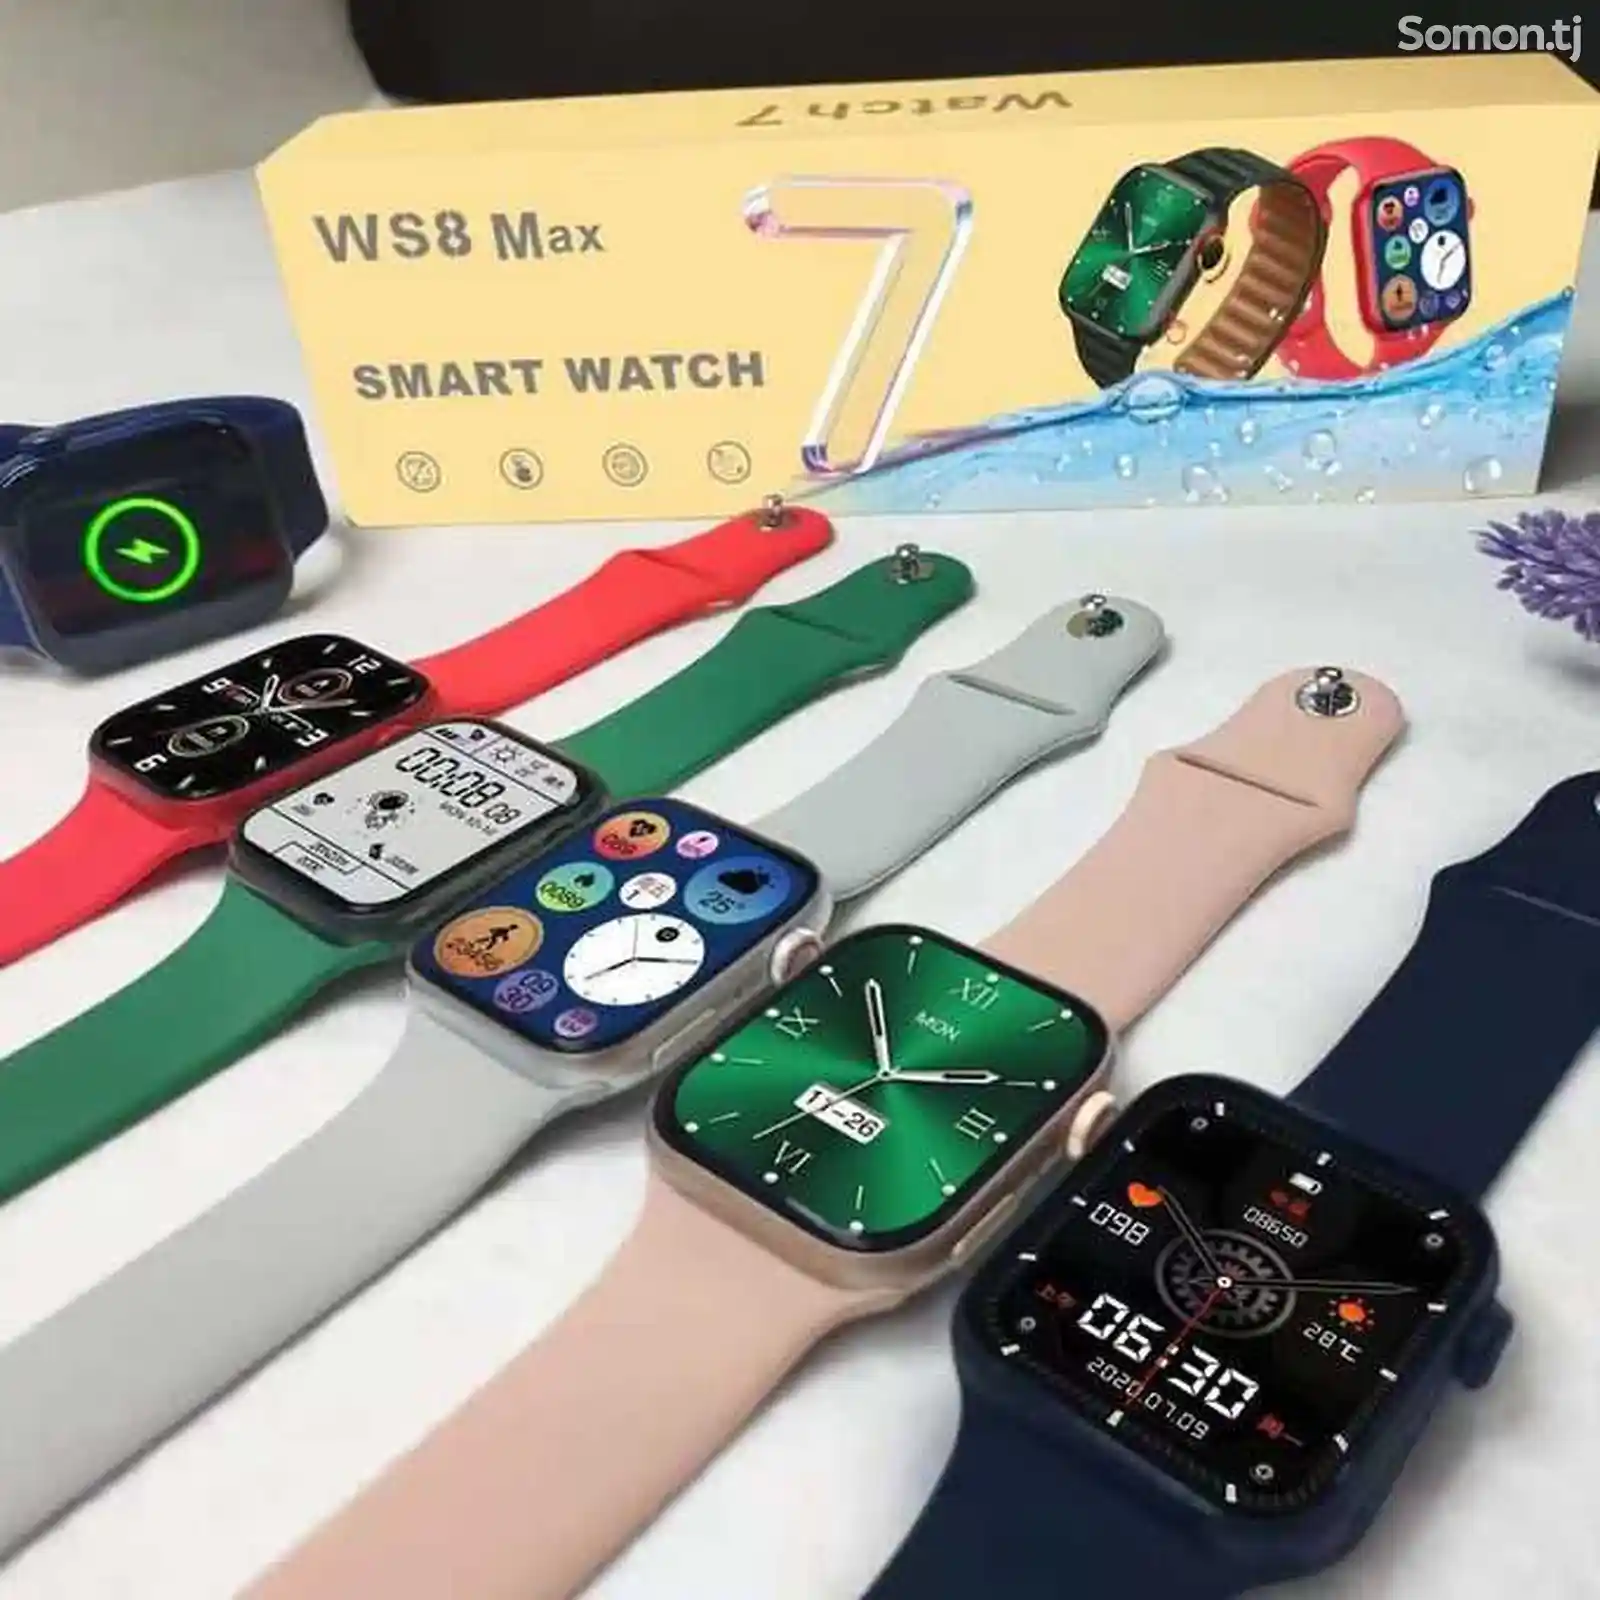 Смарт часы Apple Watch WS8 Max